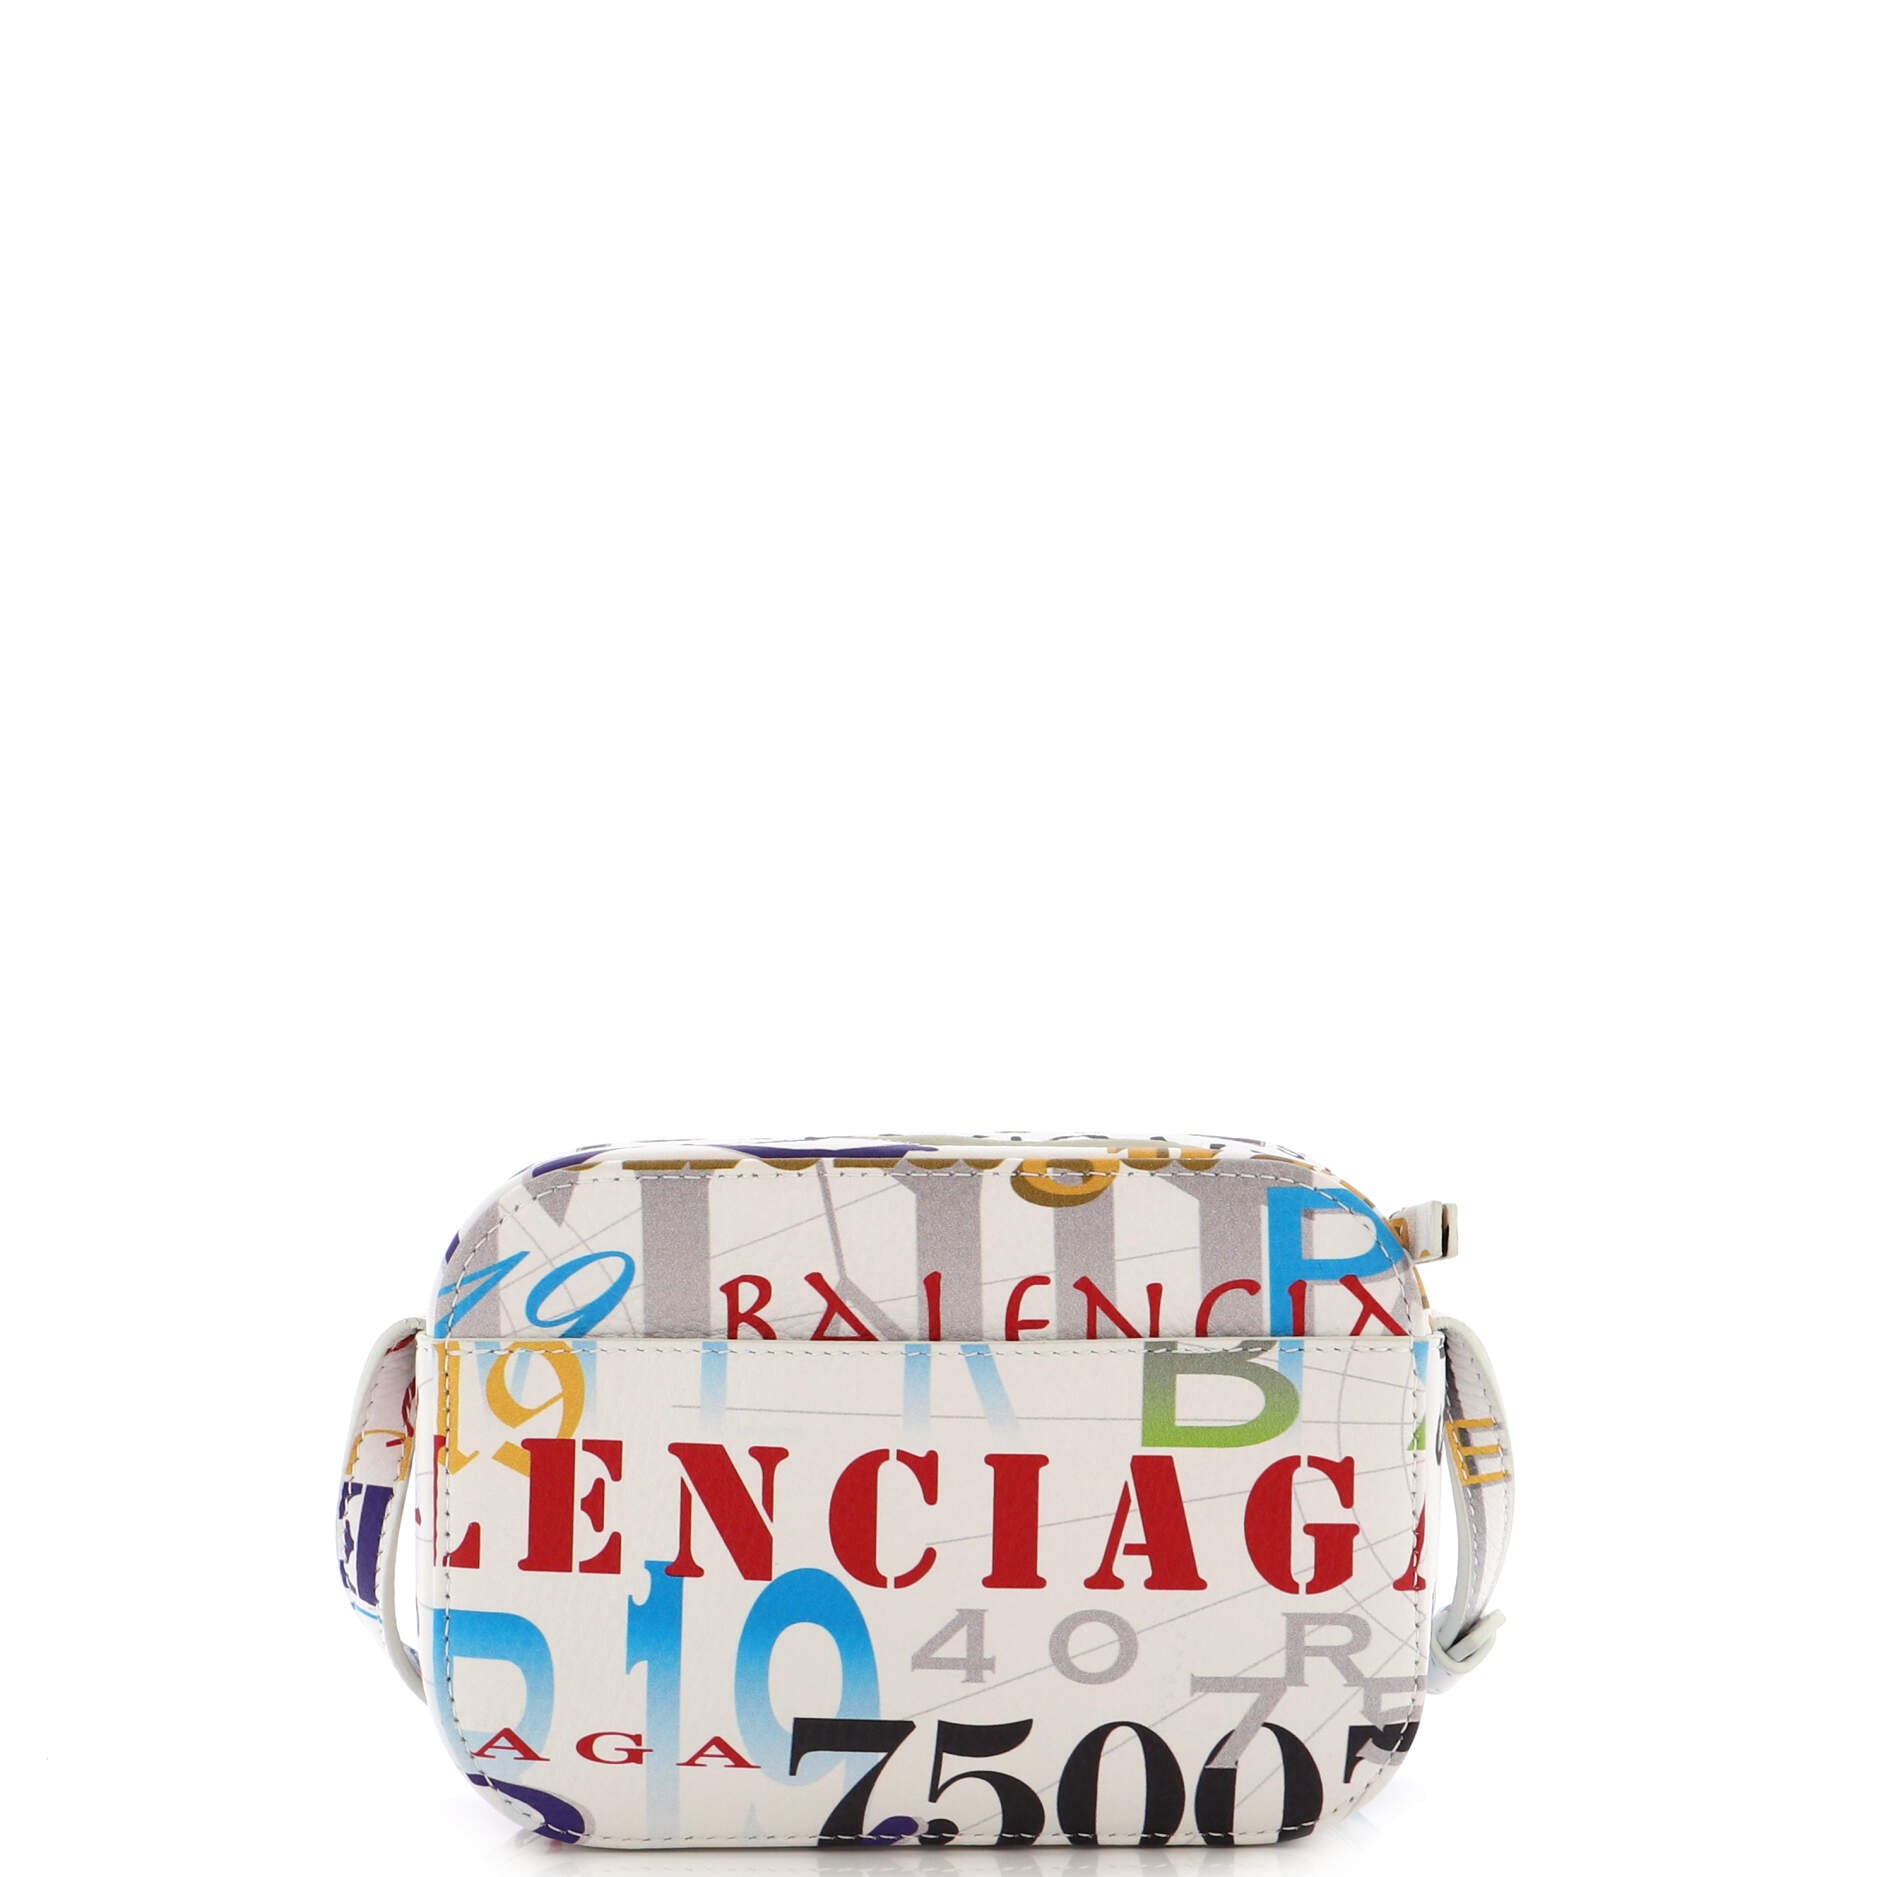 Balenciaga Leather Everyday Camera Bag XS Shoulder 552372 Yellow